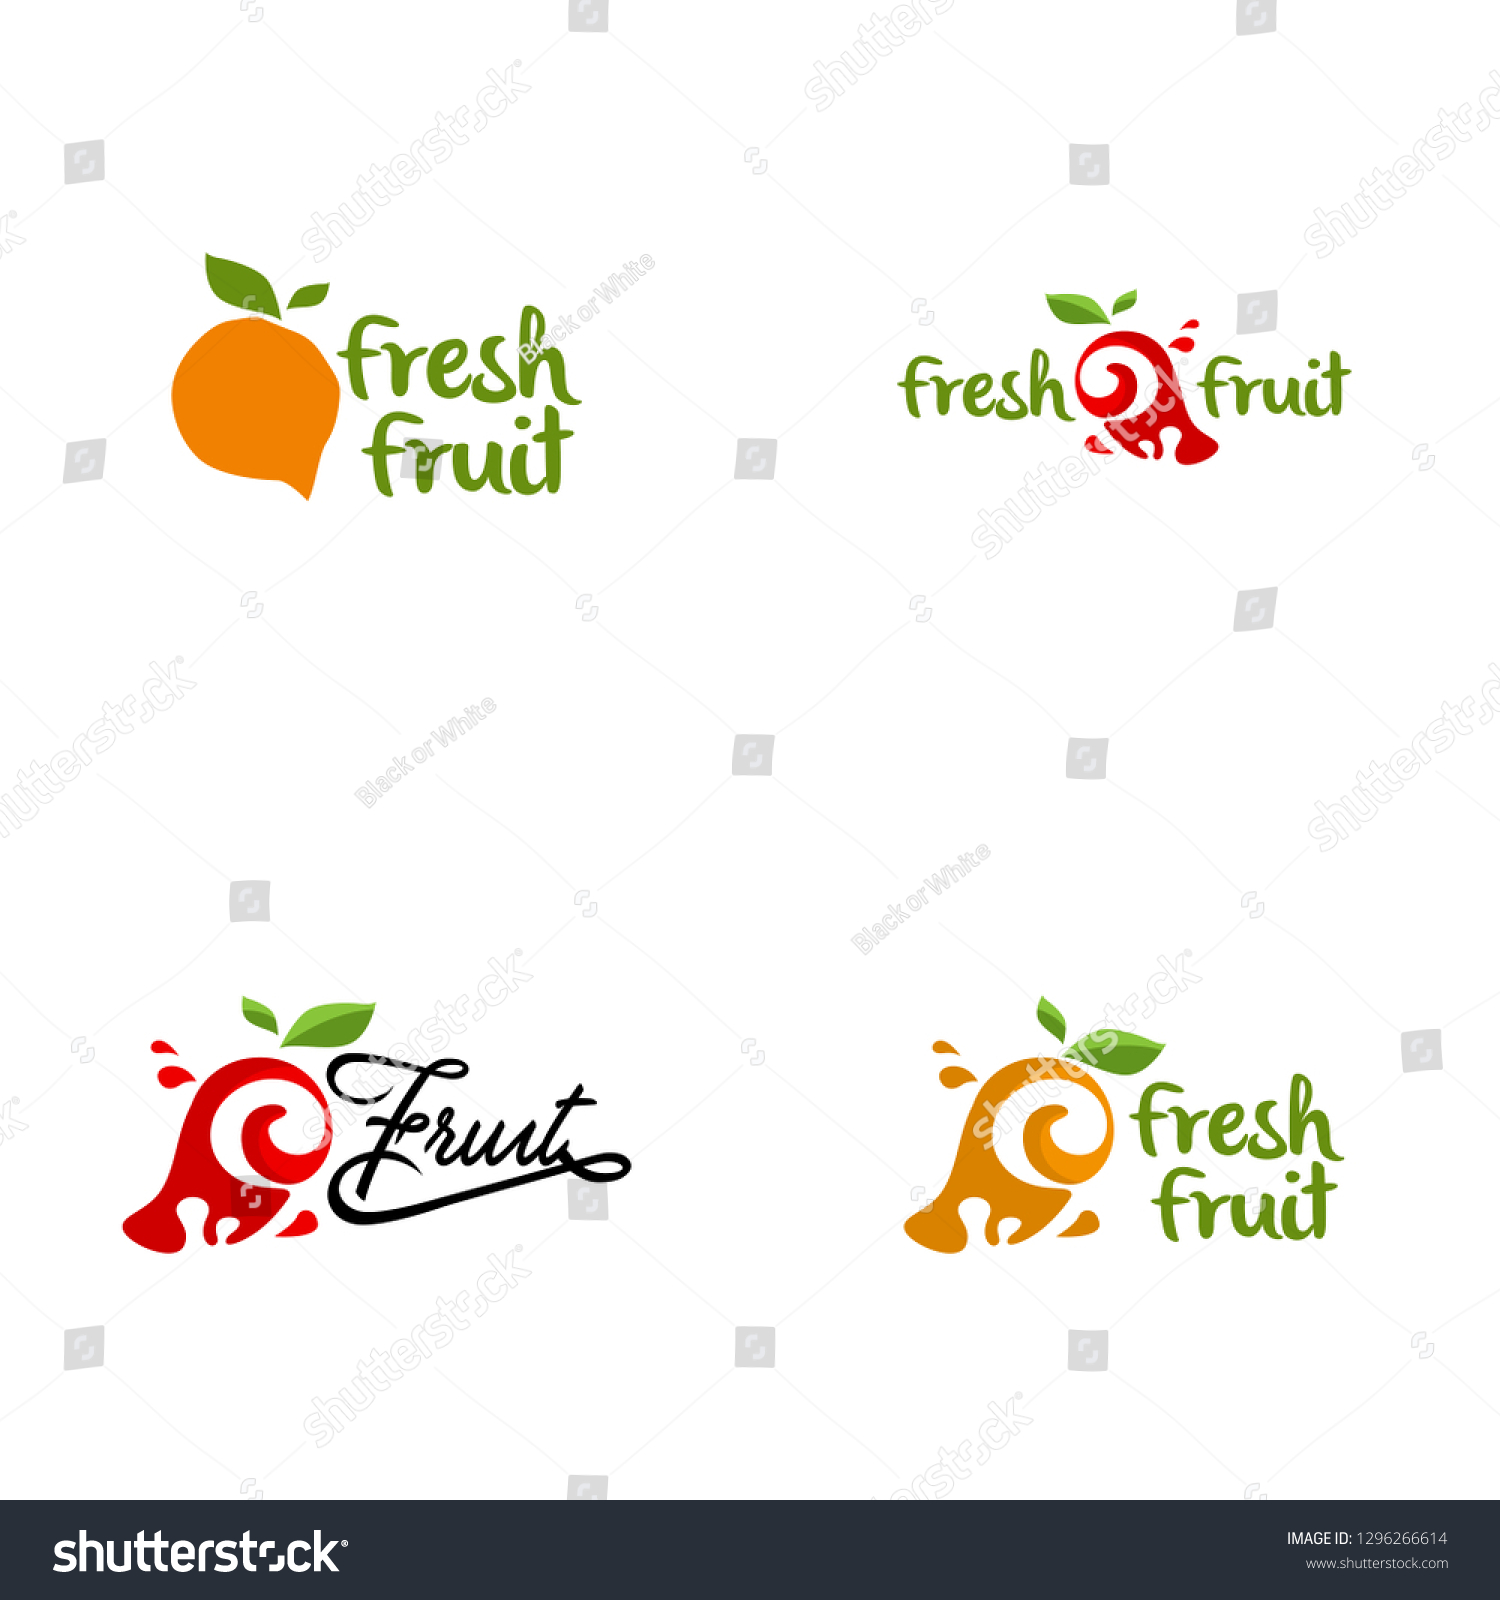 Fruit Logos Template - Royalty Free Stock Vector 1296266614 - Avopix.com